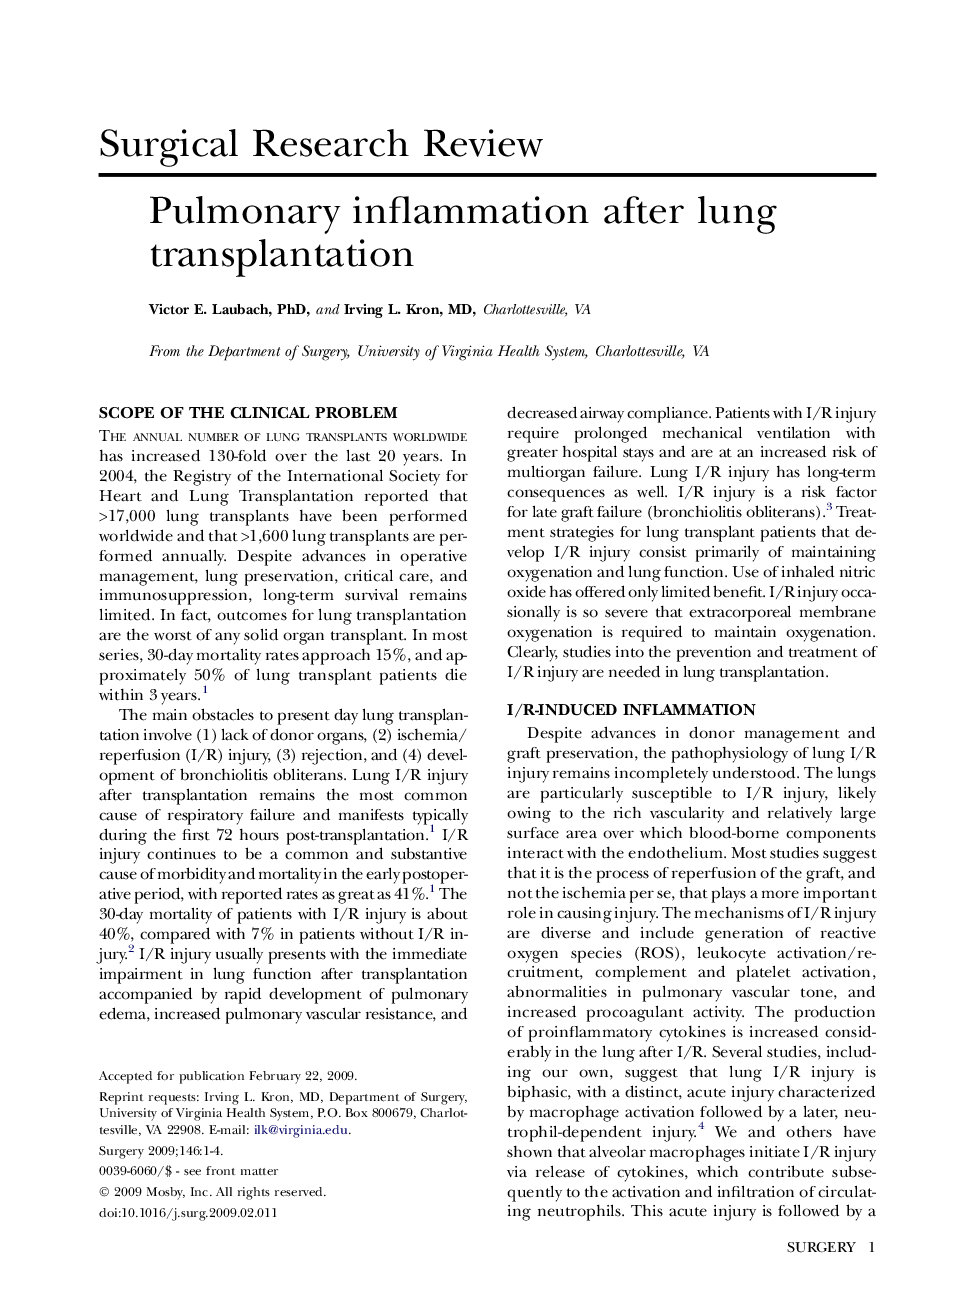 Pulmonary inflammation after lung transplantation